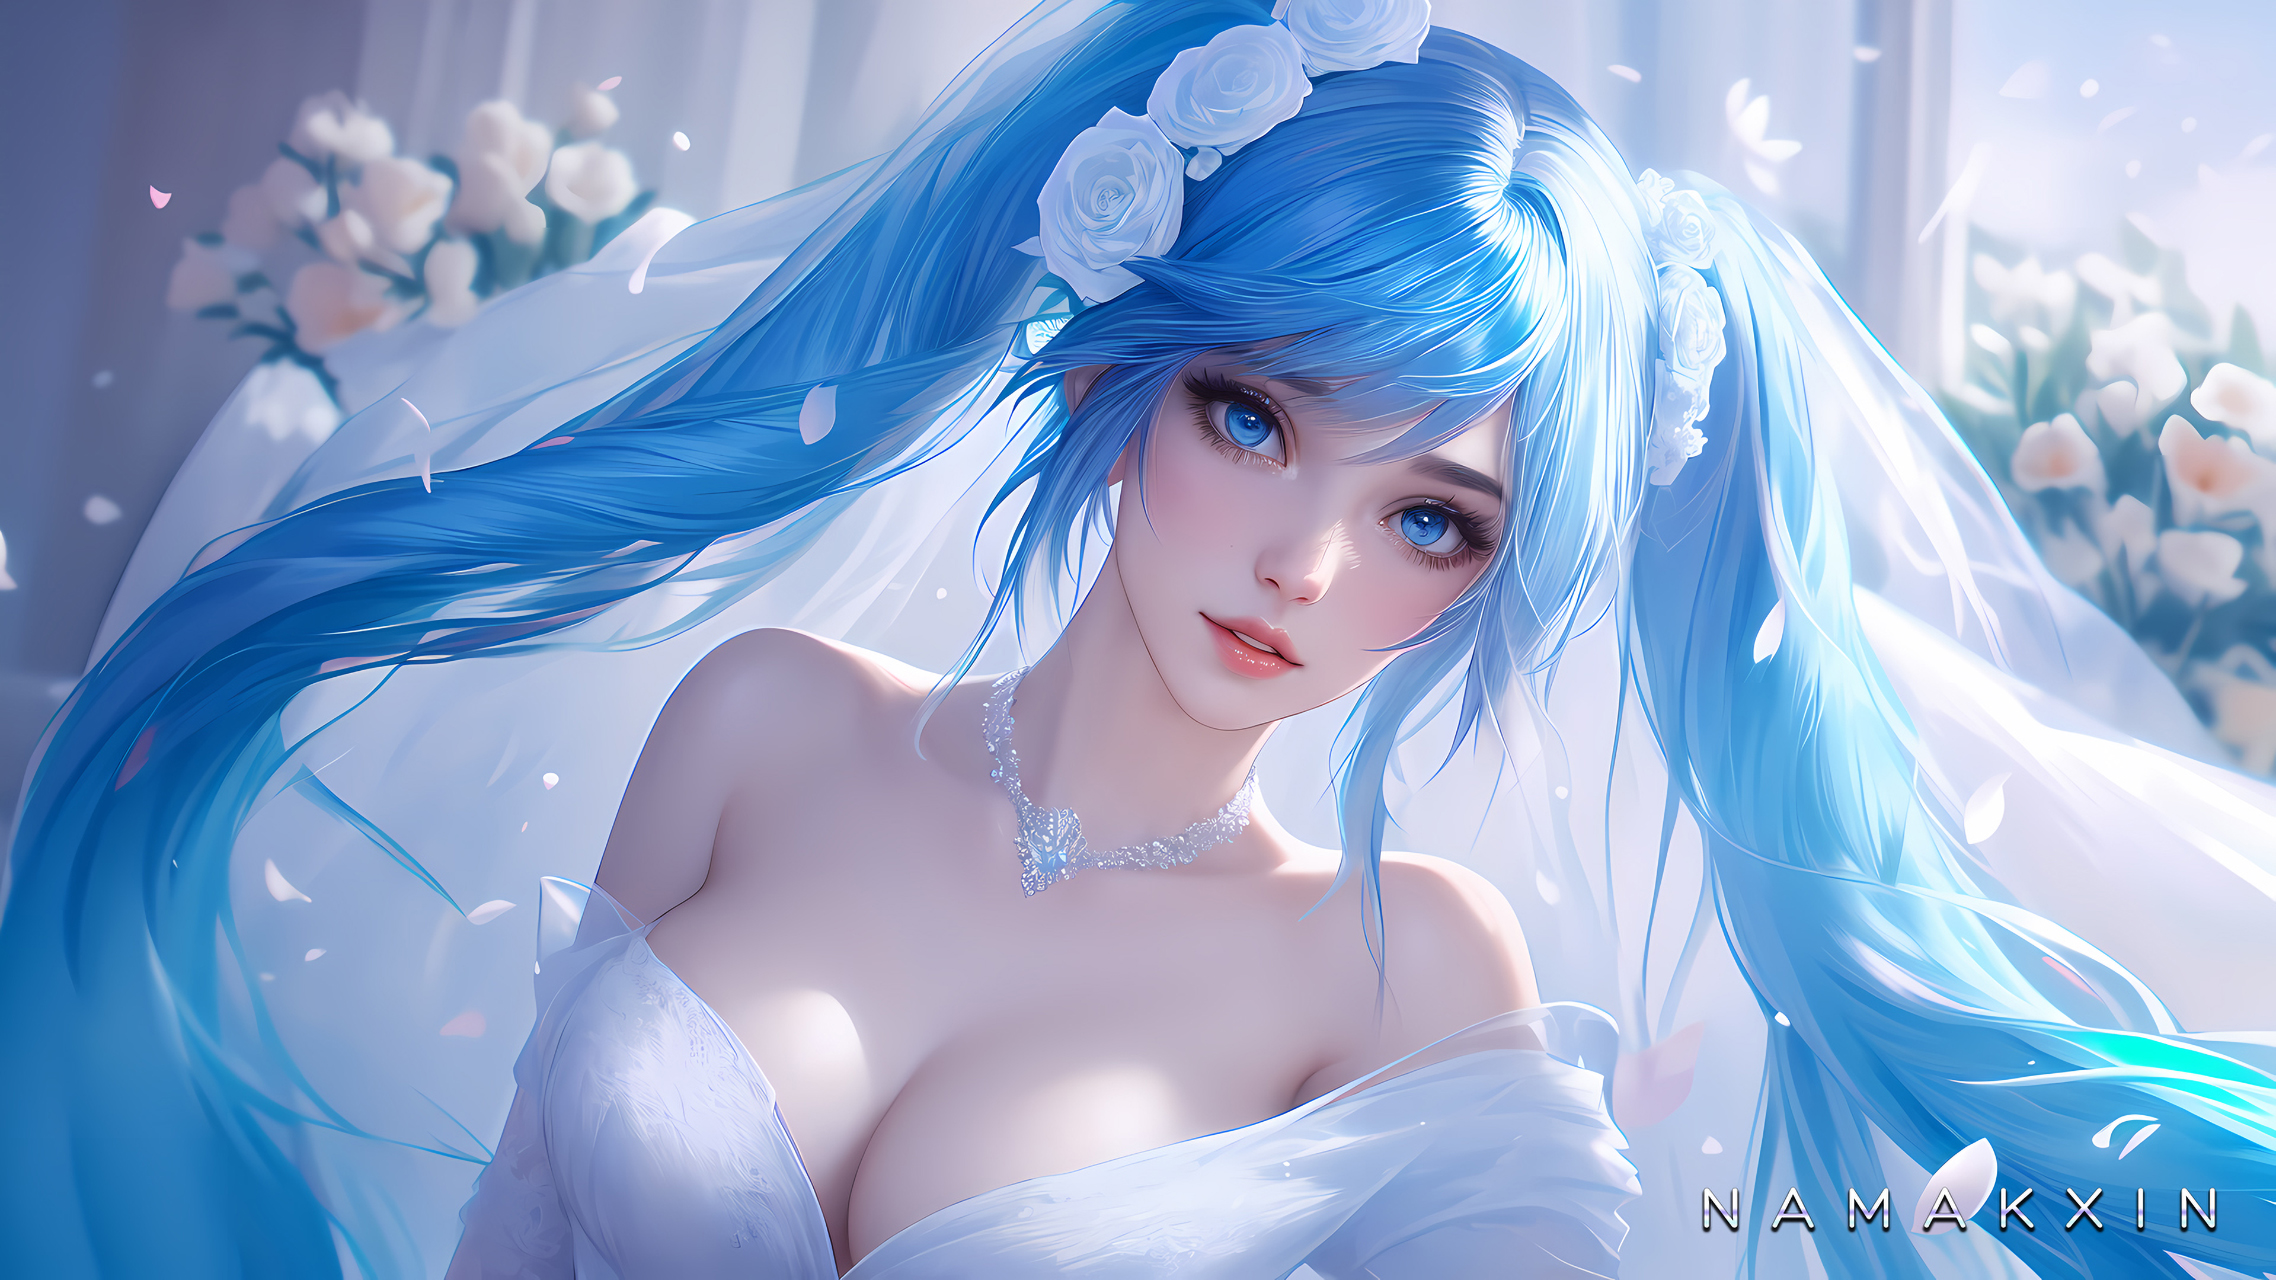 Anime 2276x1280 Namakxin AI art Sona (League of Legends) brides blue hair portrait